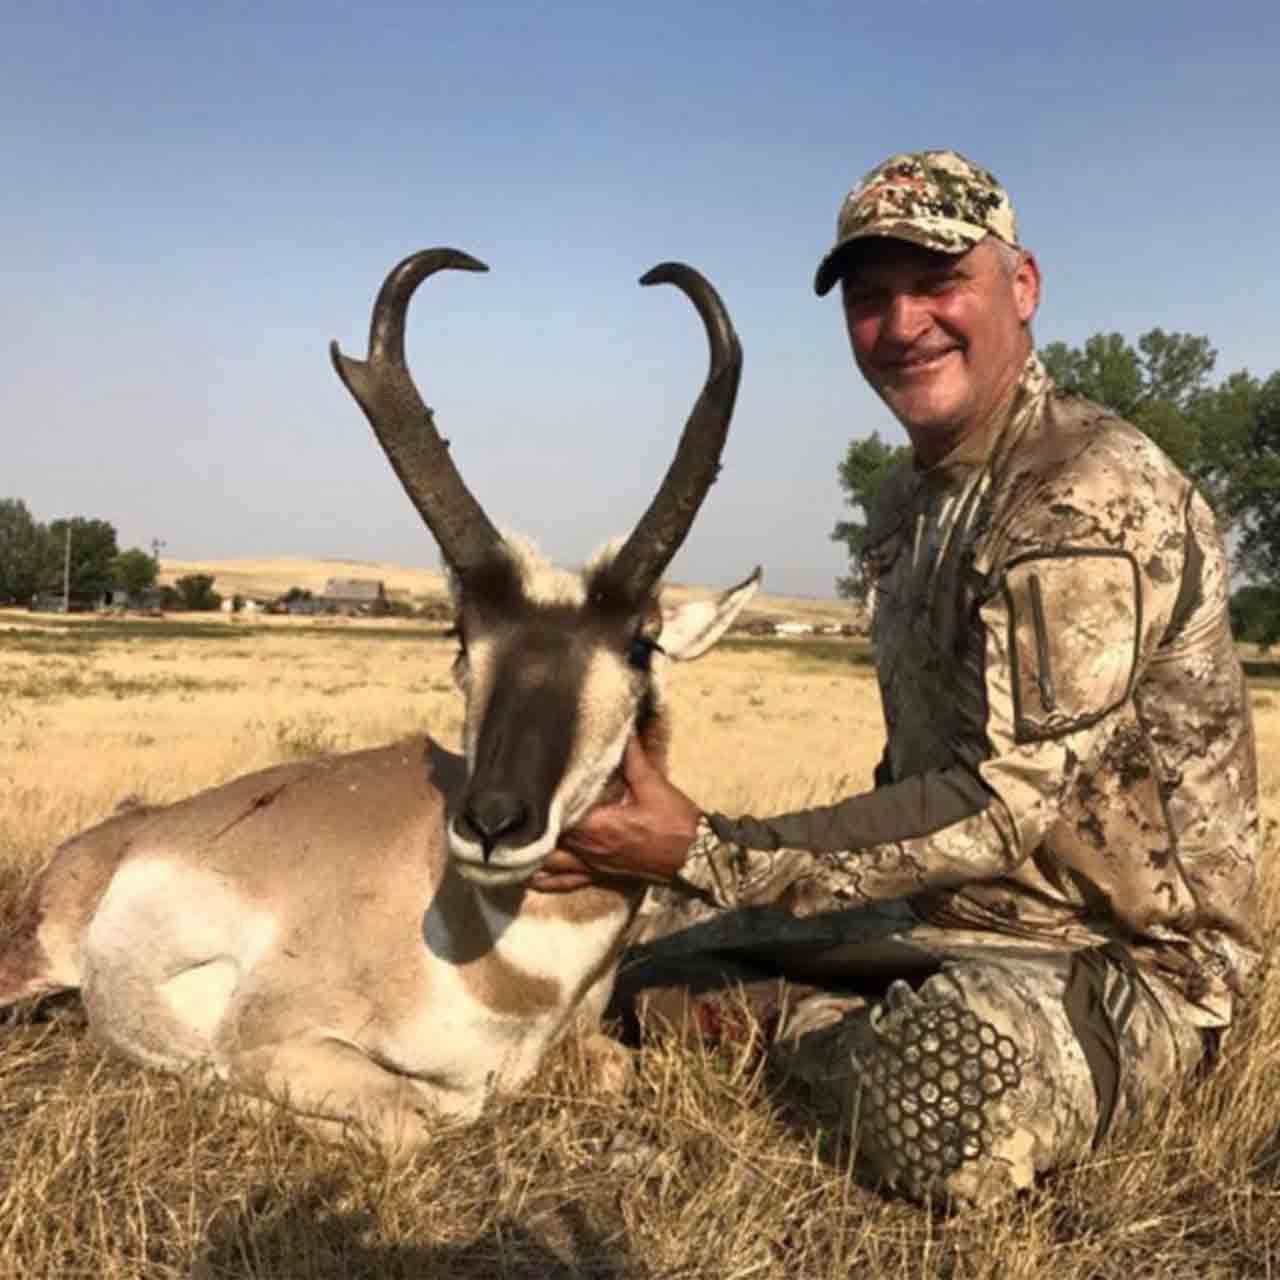 Archery antelope hunt